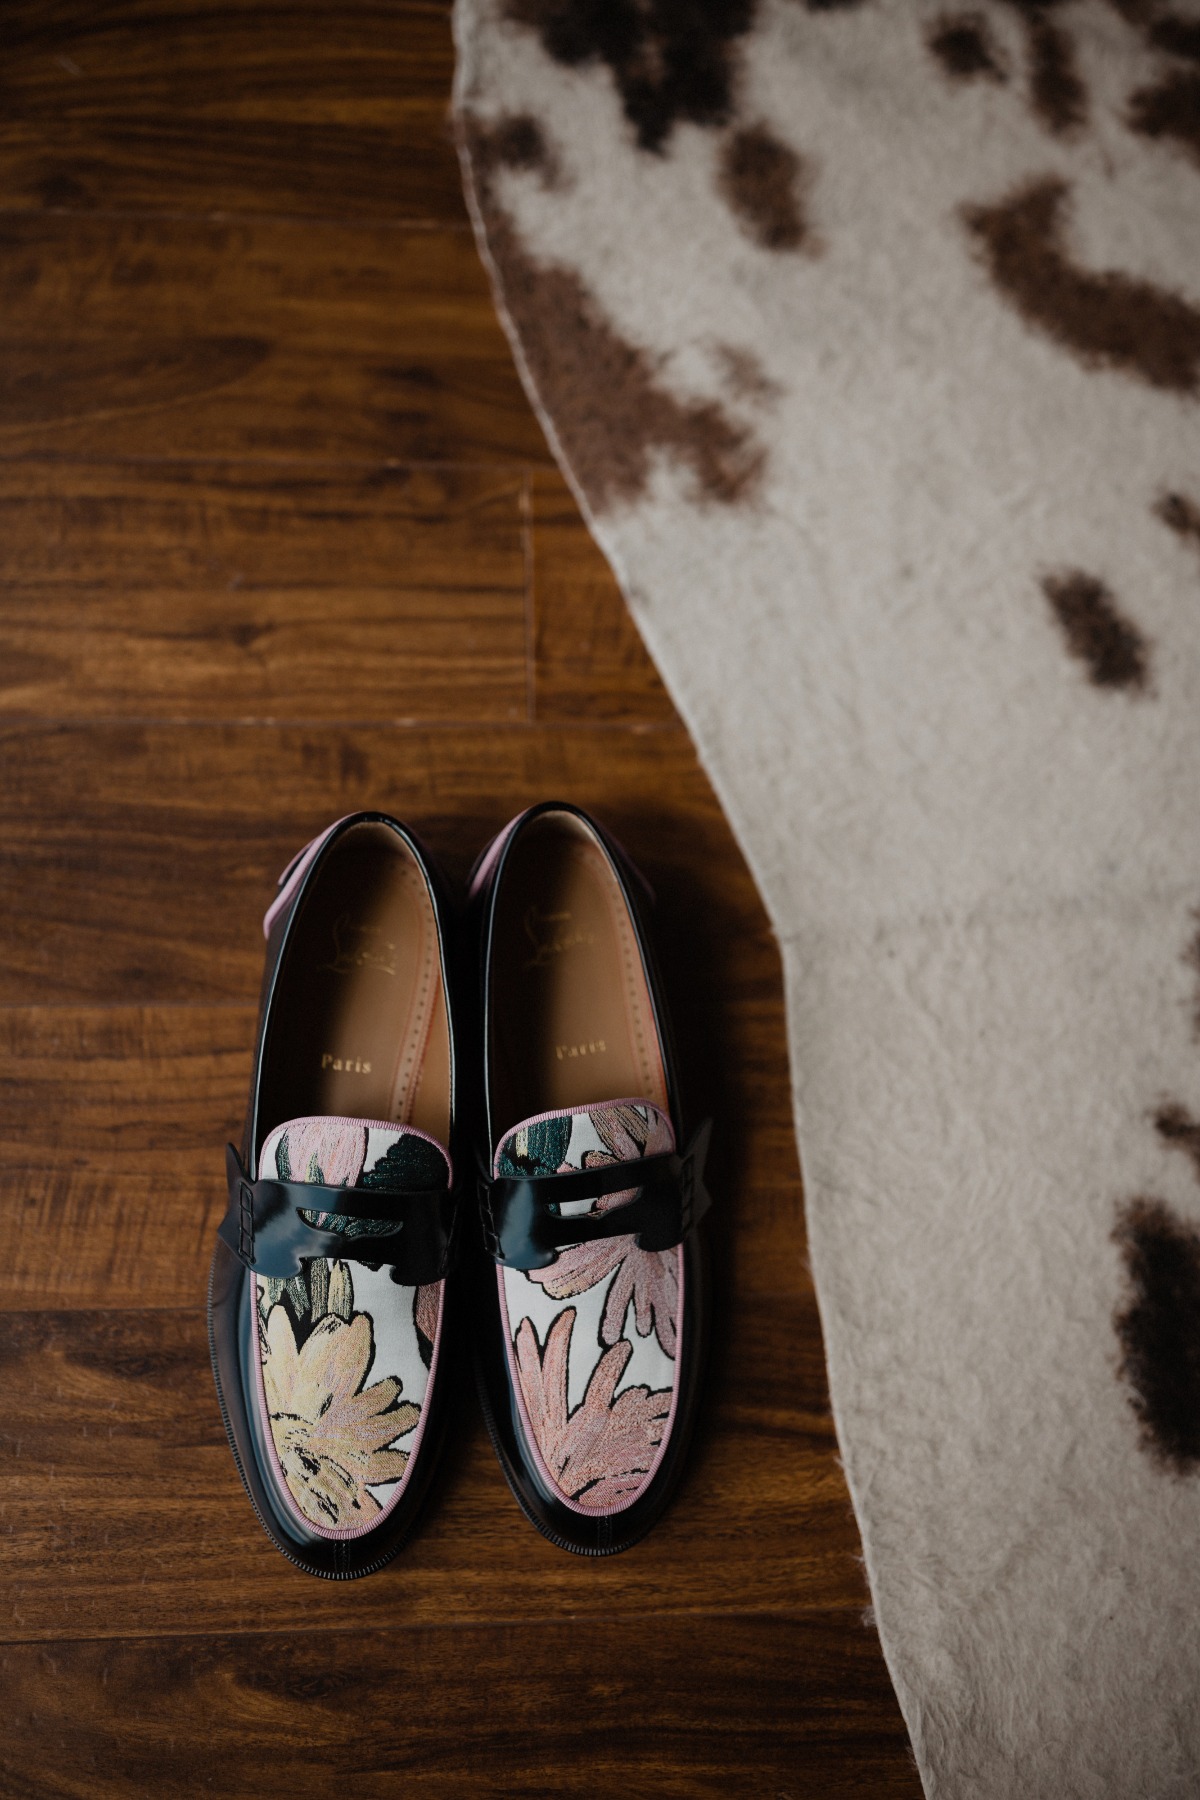 Louboutin groom shoes 